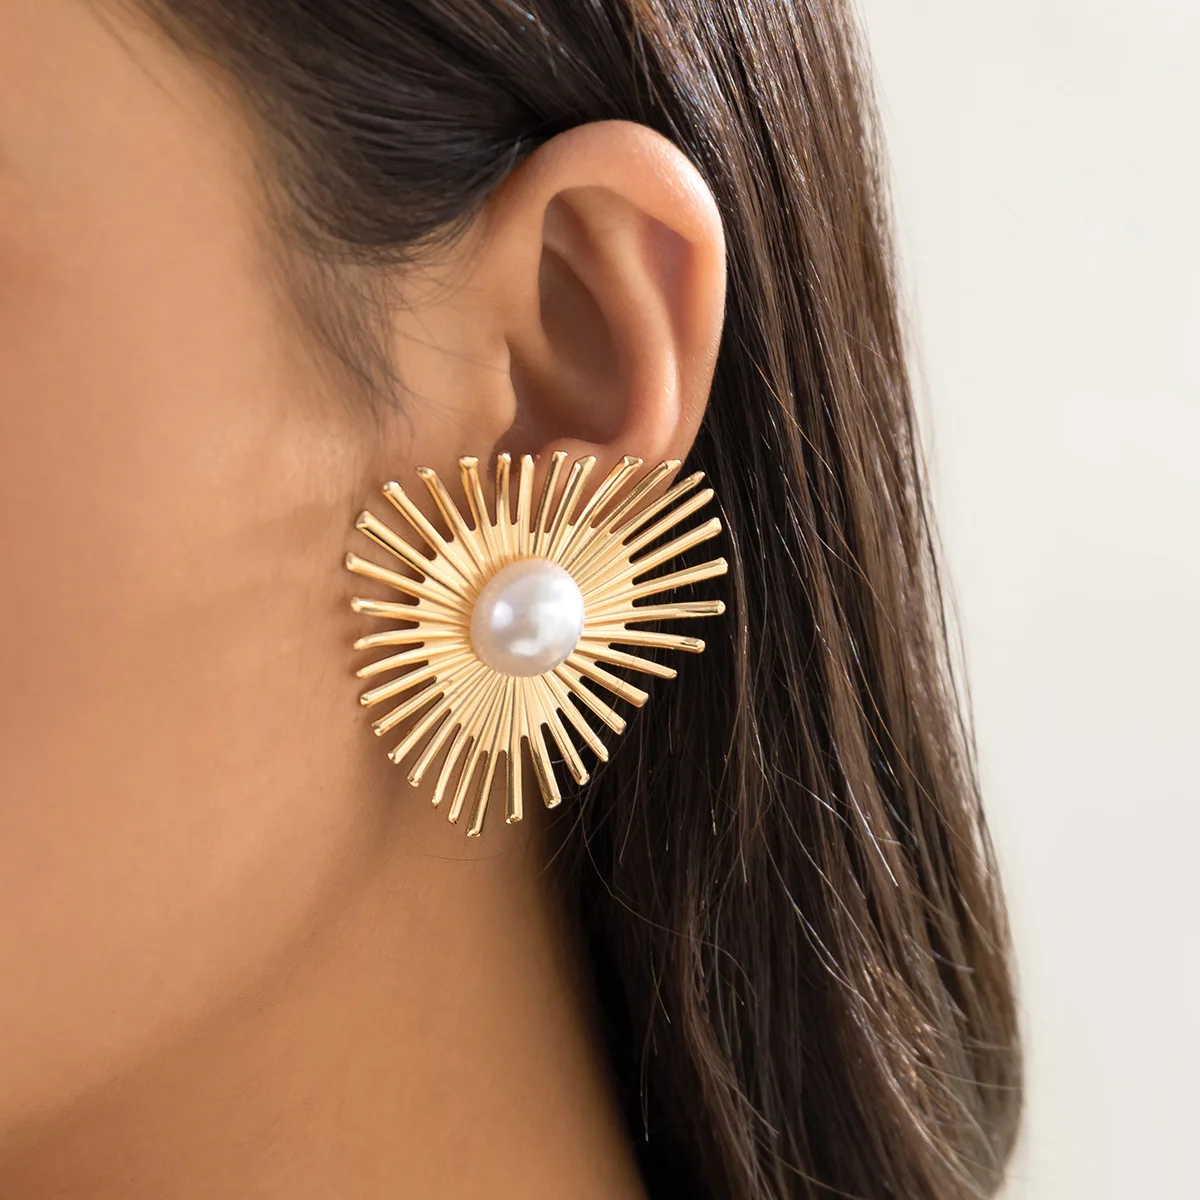 

Heart Exaggerated Long Drop Earrings for Women Big Pearl Round Dangle Earrings Wild Sun Earings Brincos Female Fashion Jewelry